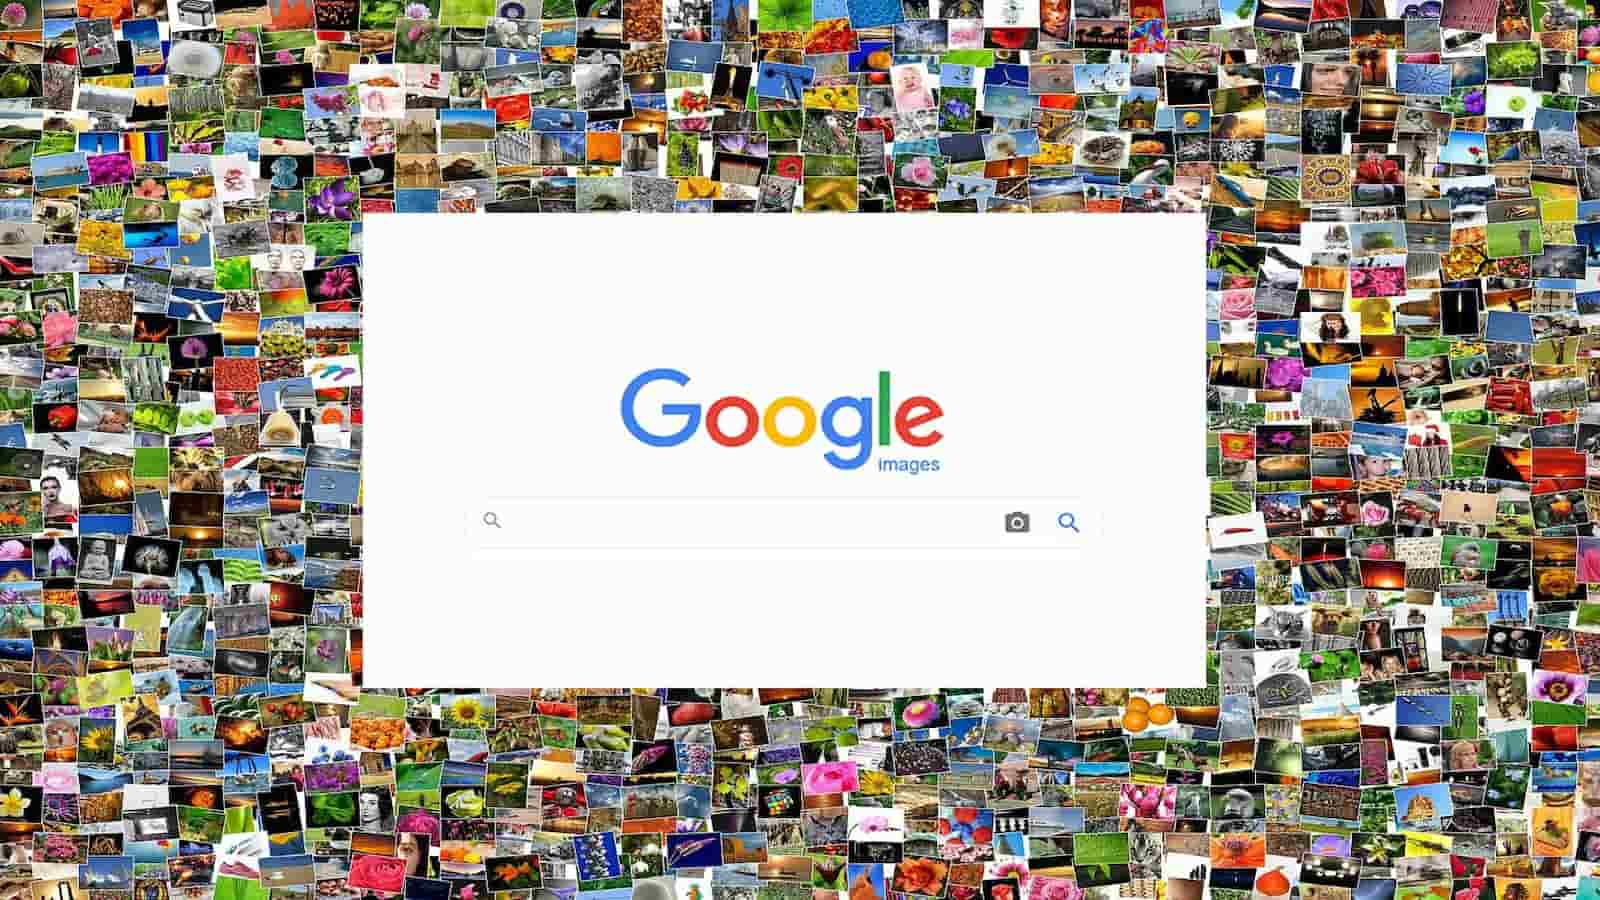 پیدا کردن منبع عکس در گوگل